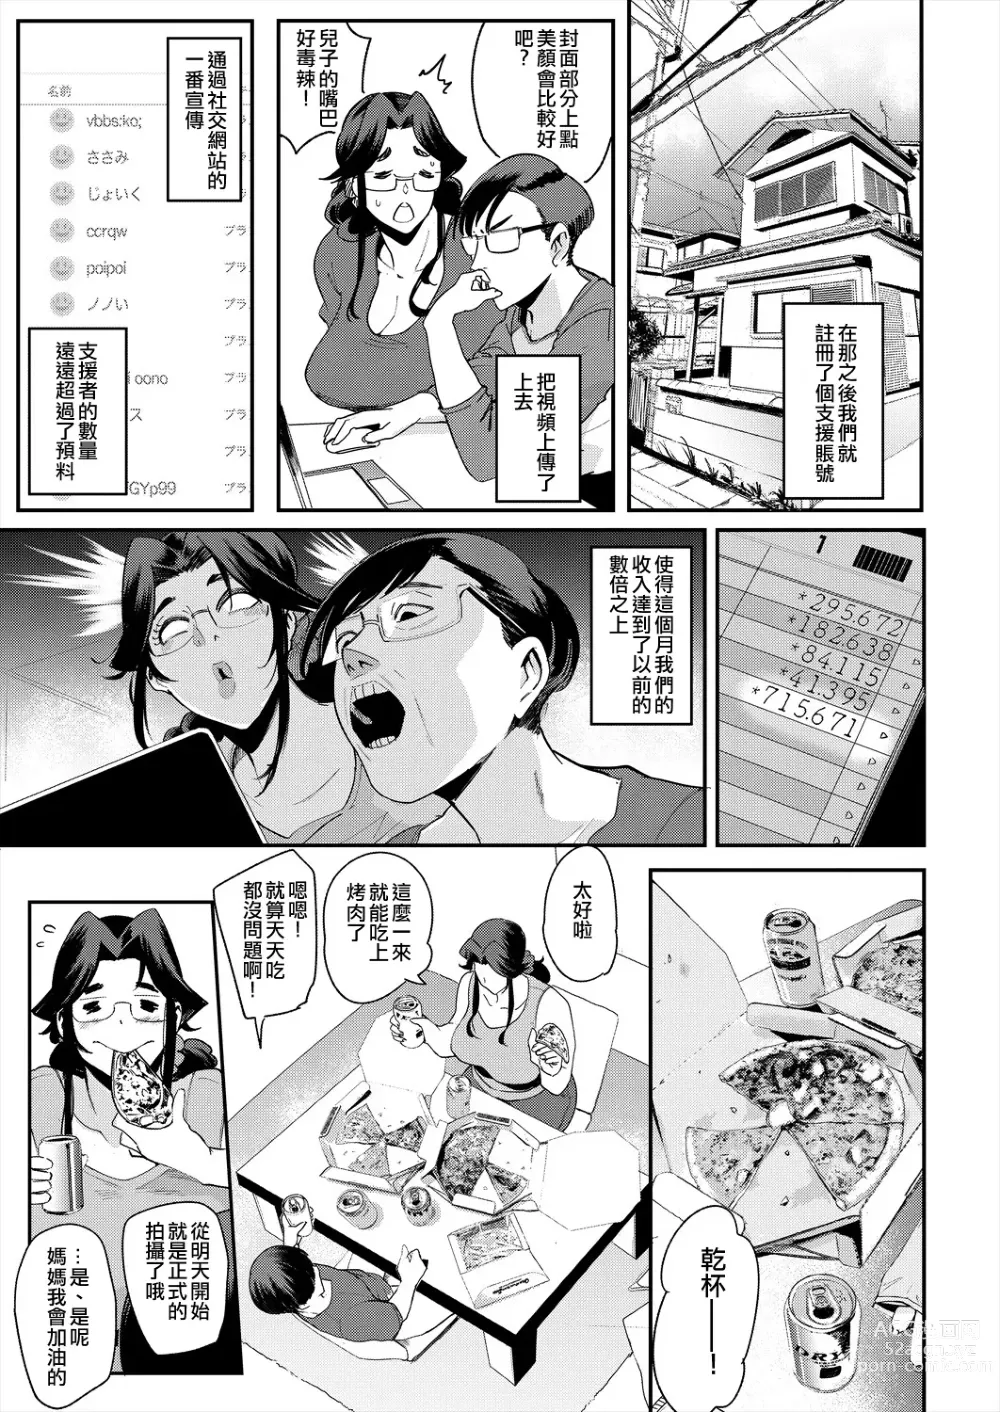 Page 11 of manga Subscription Mama!